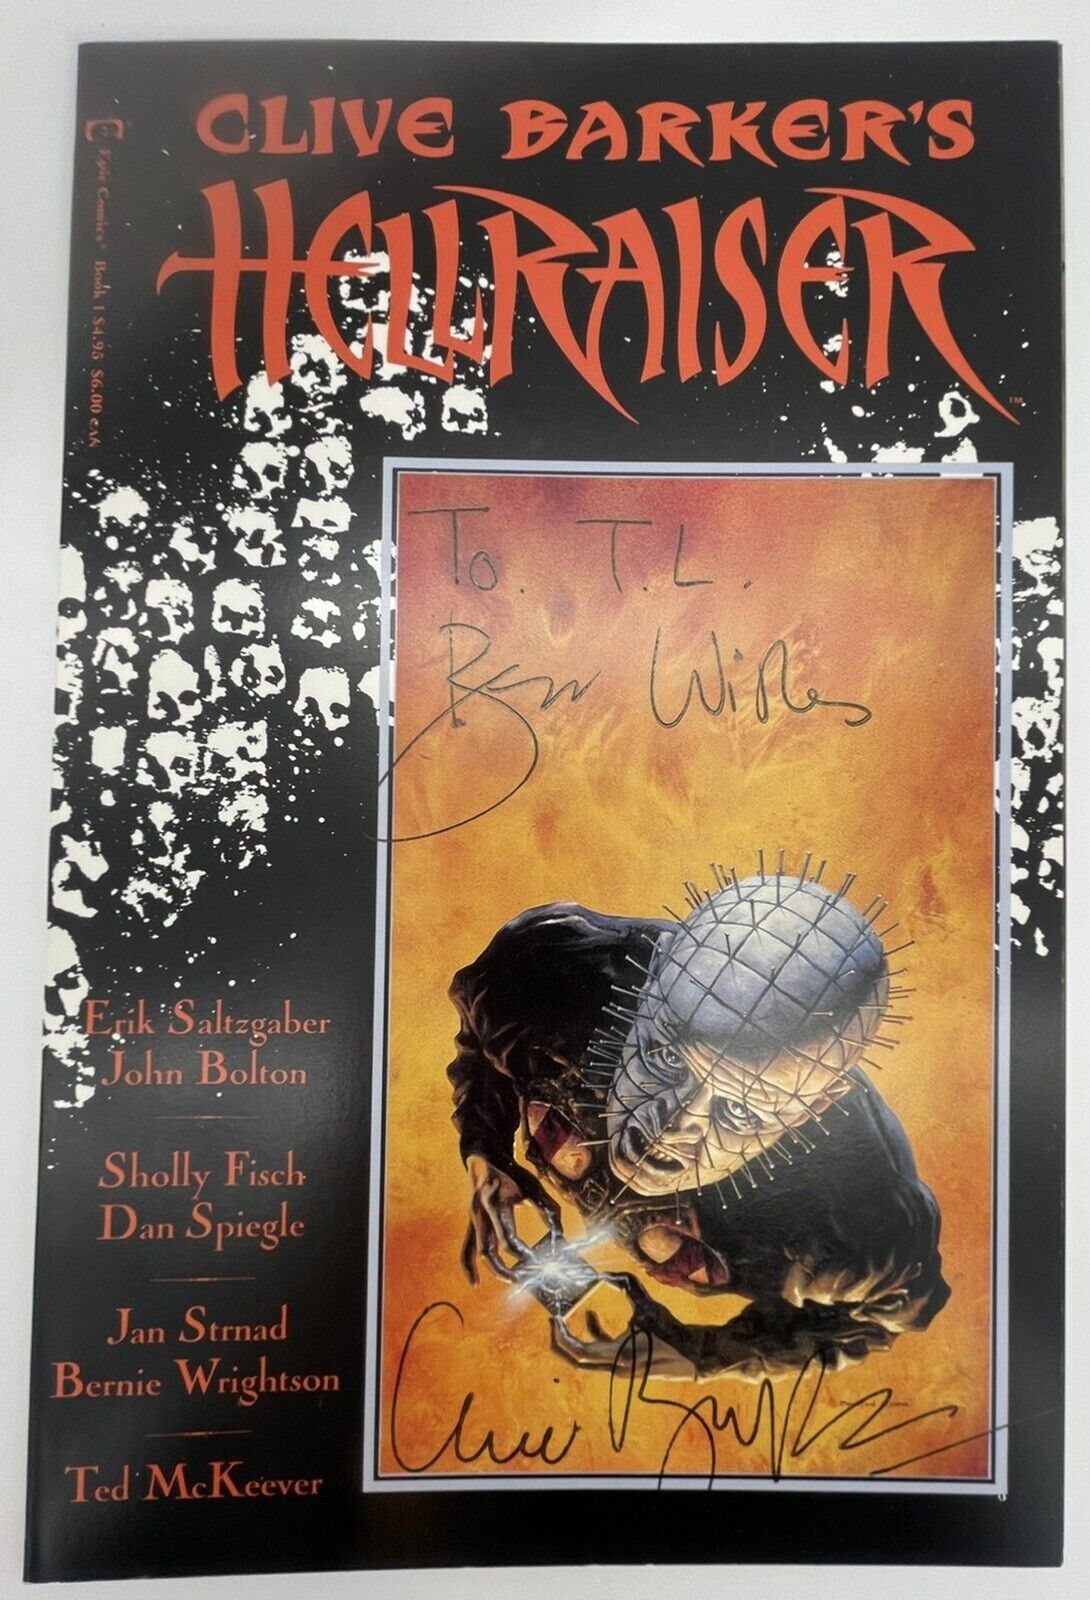 Clive Barker’s Hellraiser #1 (Epic Comics 1989) SIGNED BY CLIVE BARKER